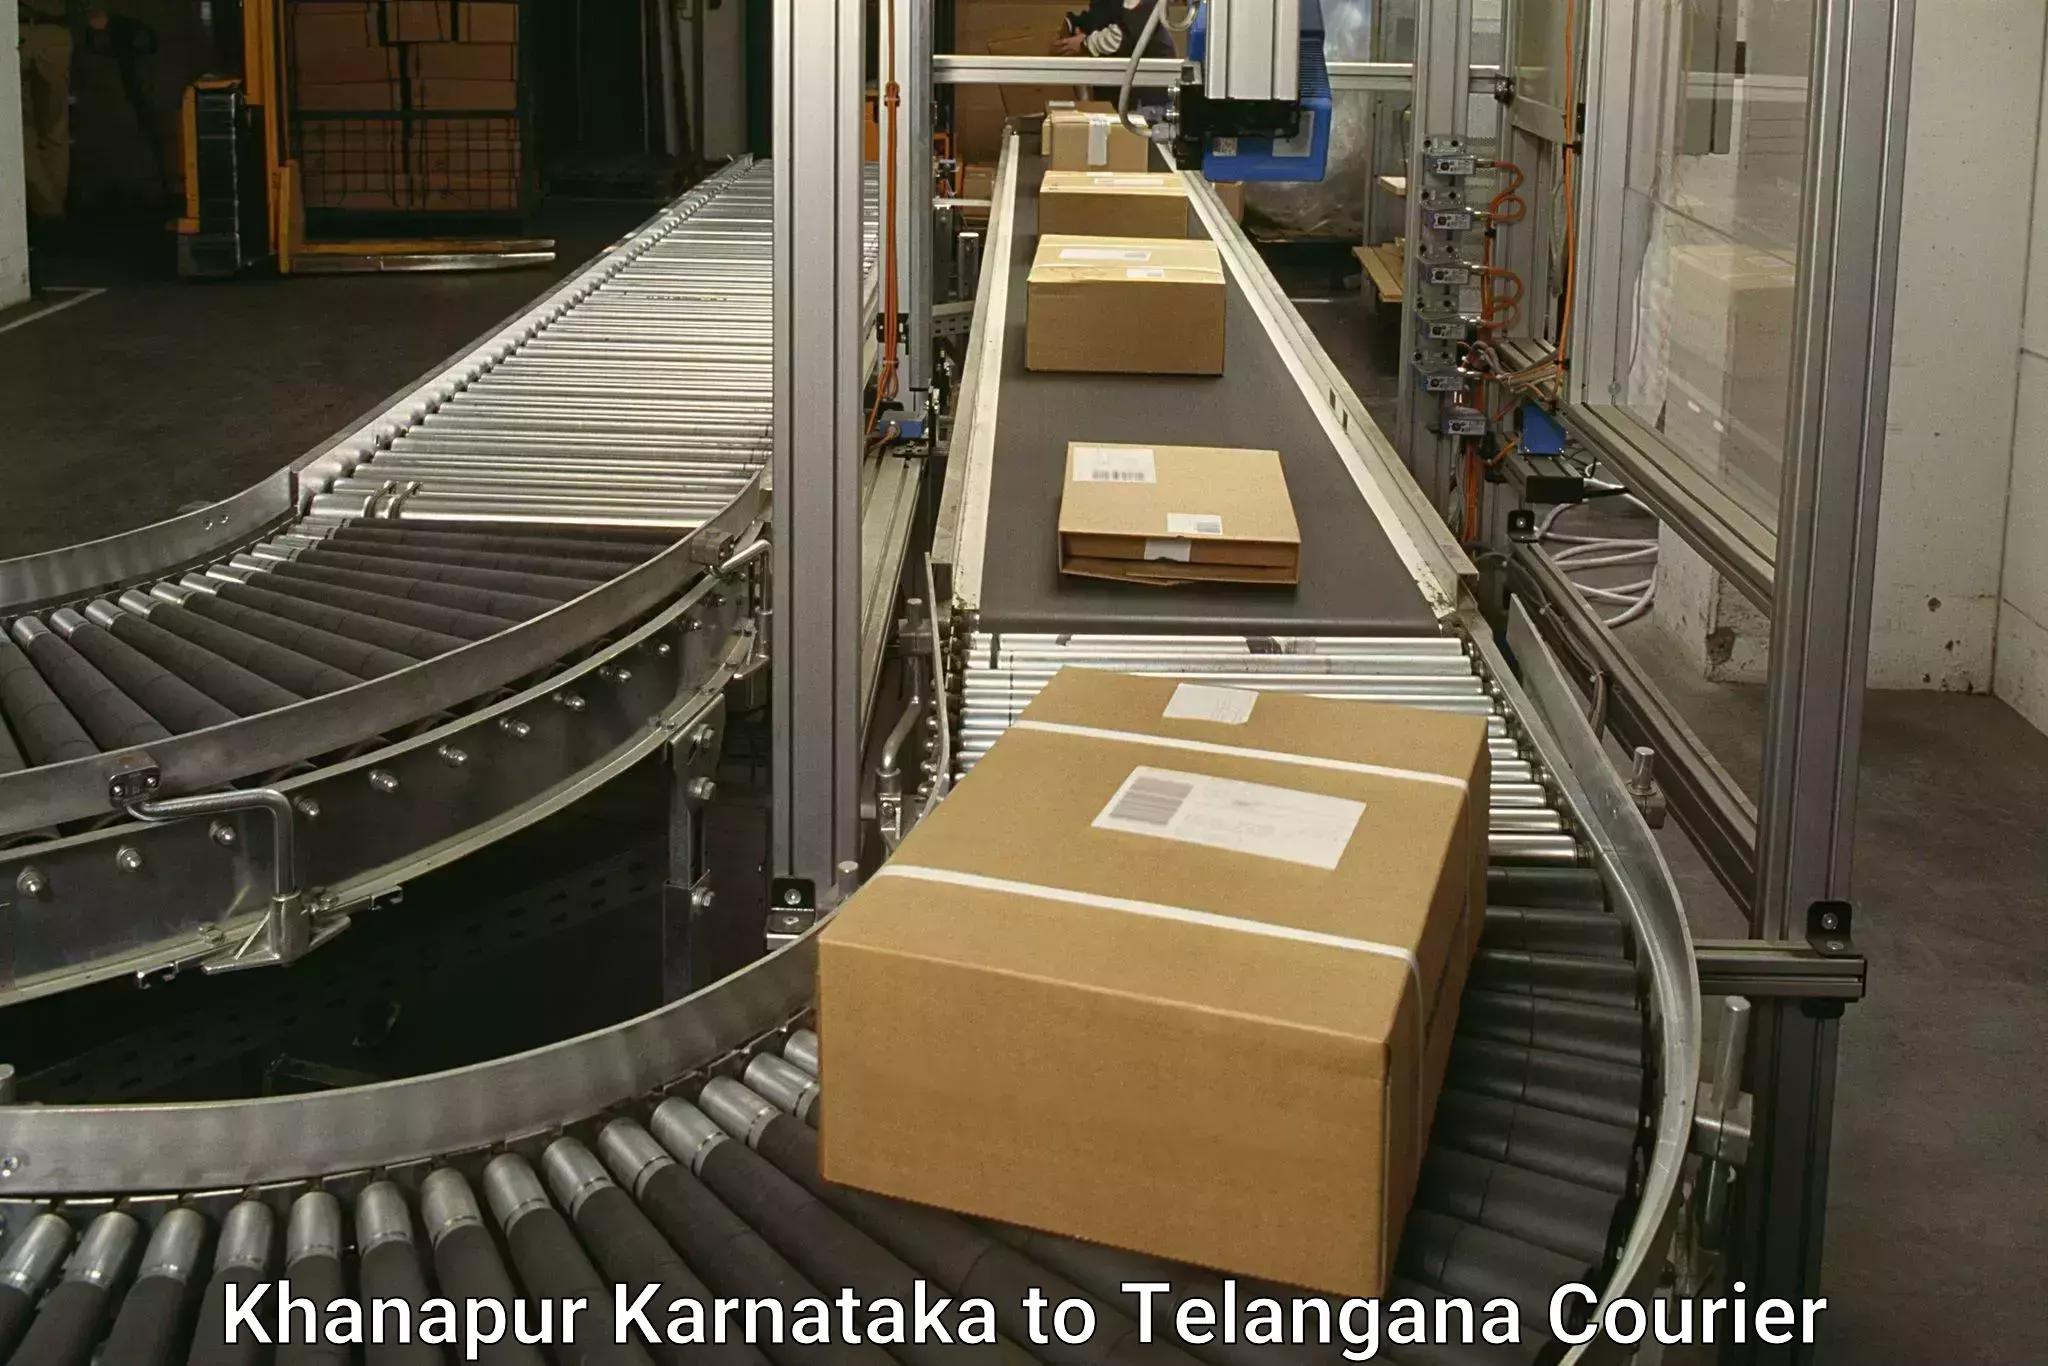 Express delivery capabilities Khanapur Karnataka to Sangareddy